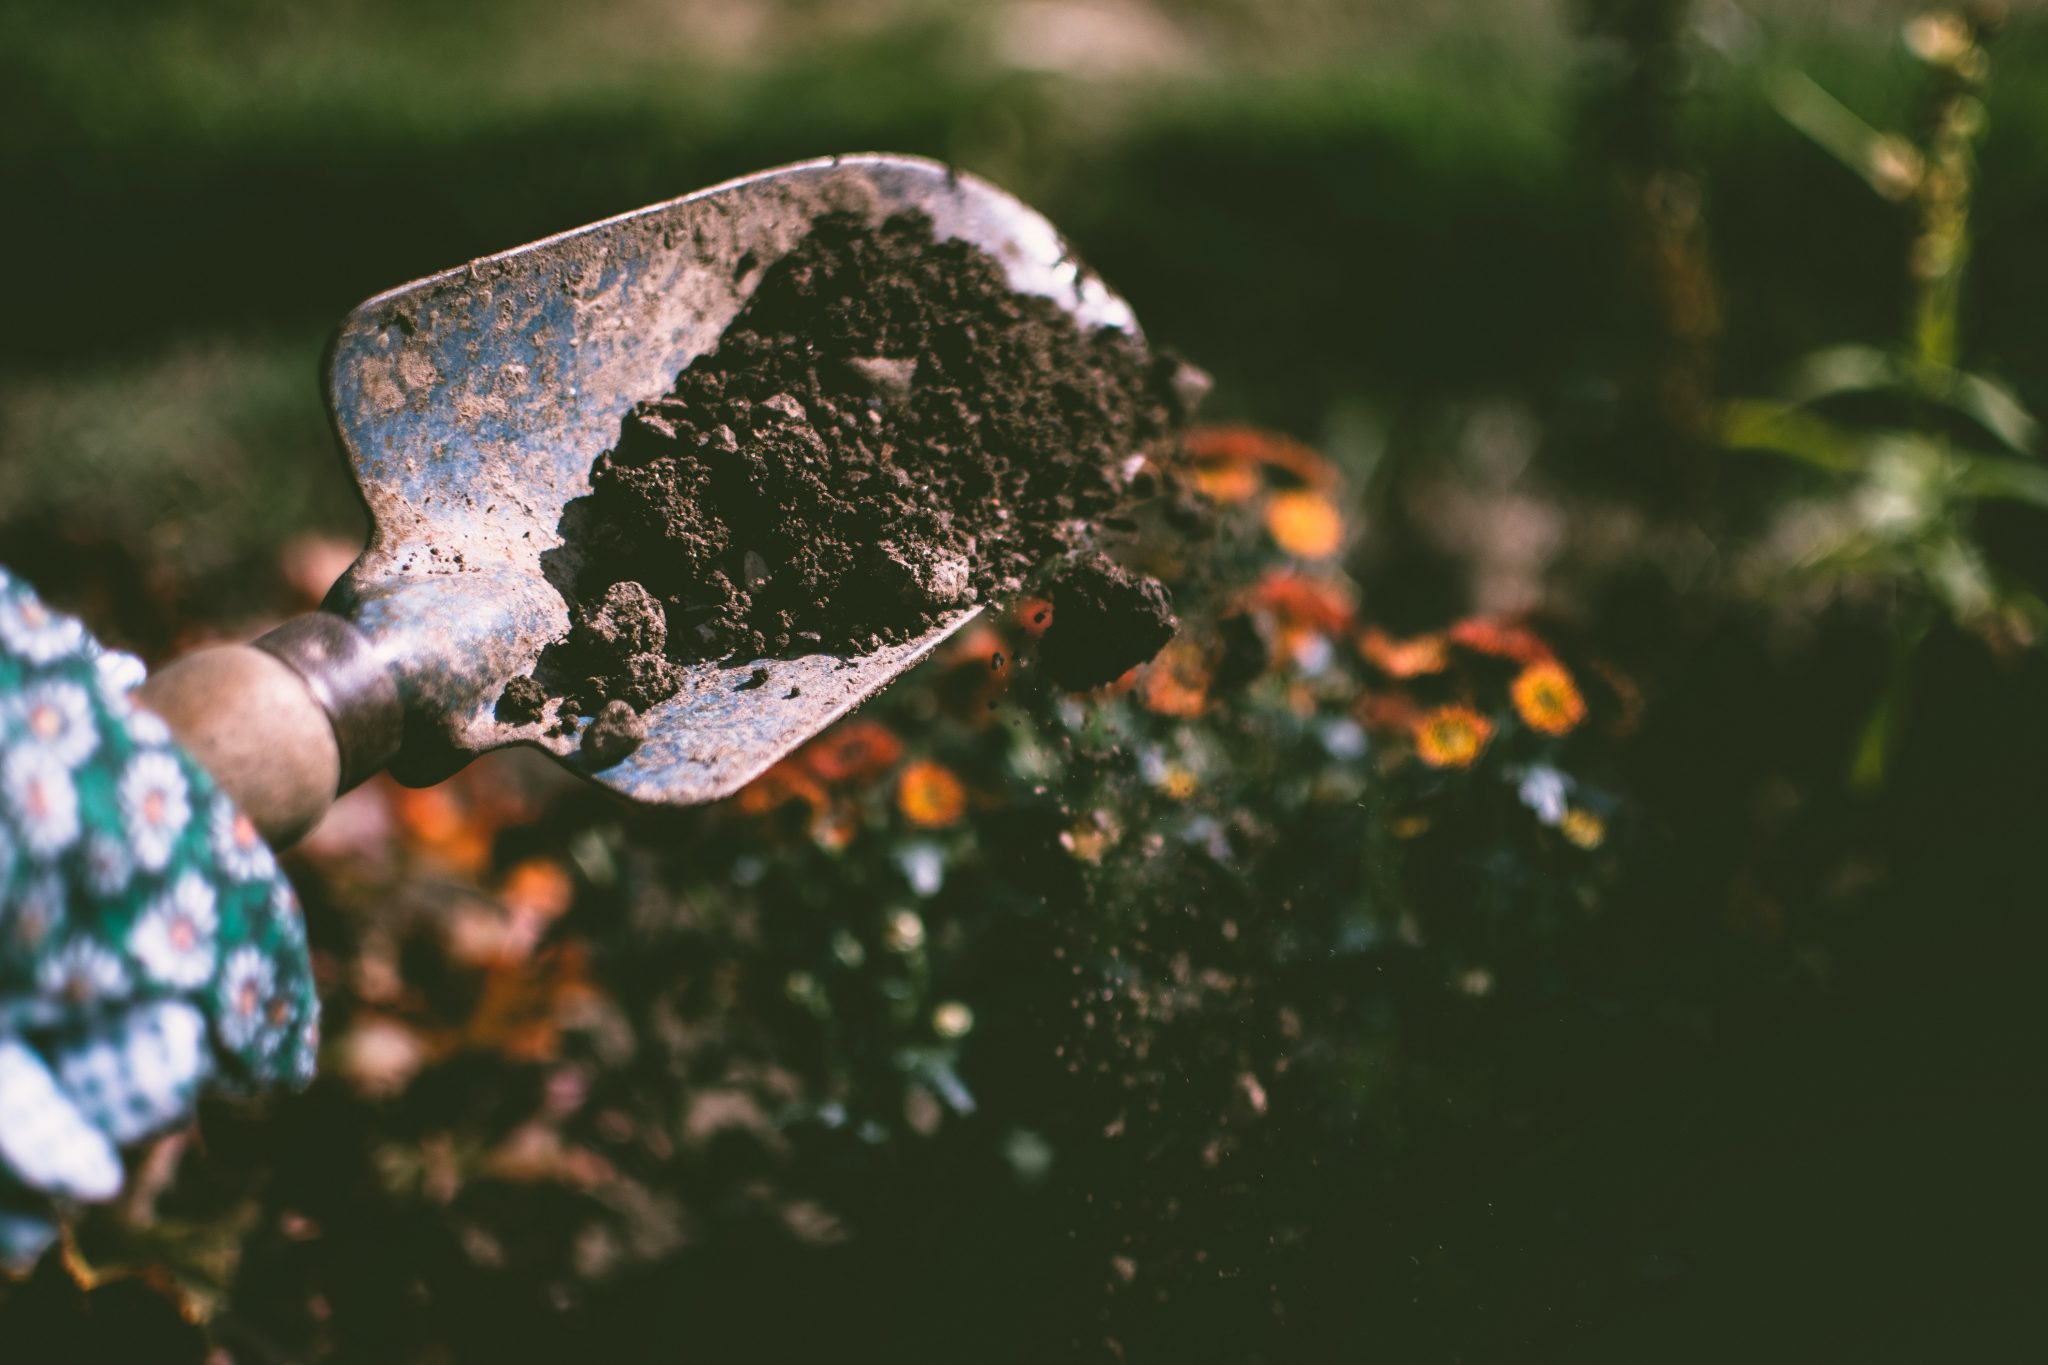 Digging up soil using garden shovel